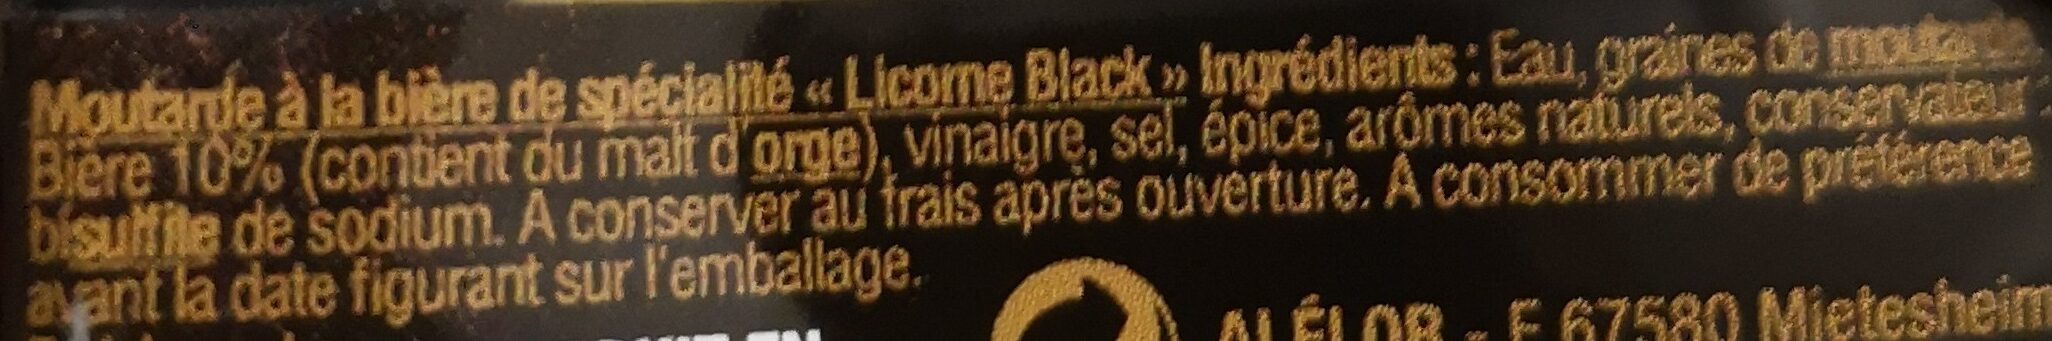 Motarde à la Black Licorne - Ingrediënten - fr